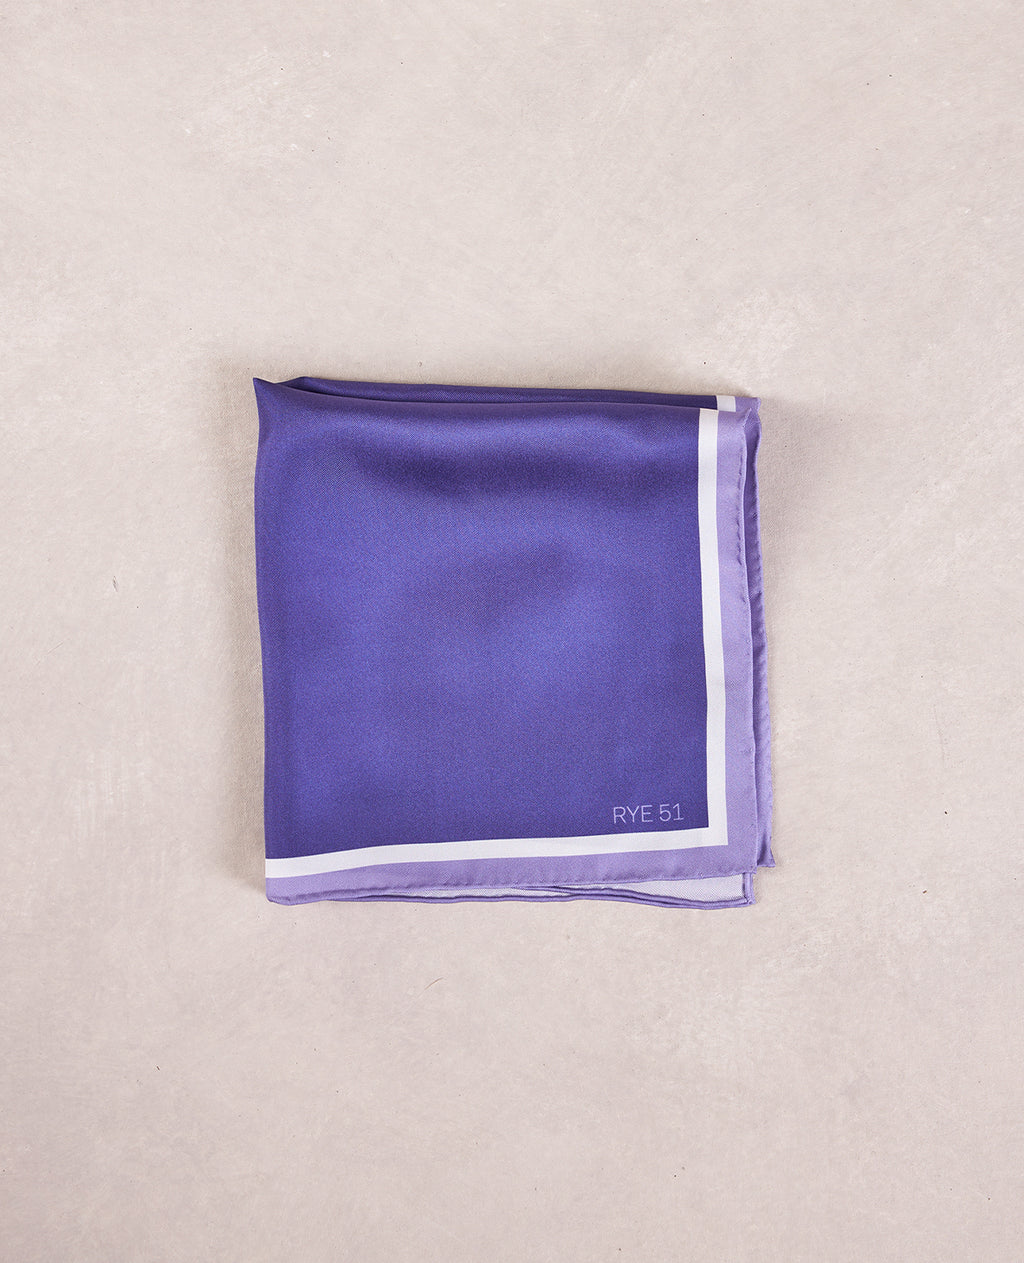 The Silk Pocket Square - 100% Silk Pocket Square - Race Stripe Purple-White/Lavender